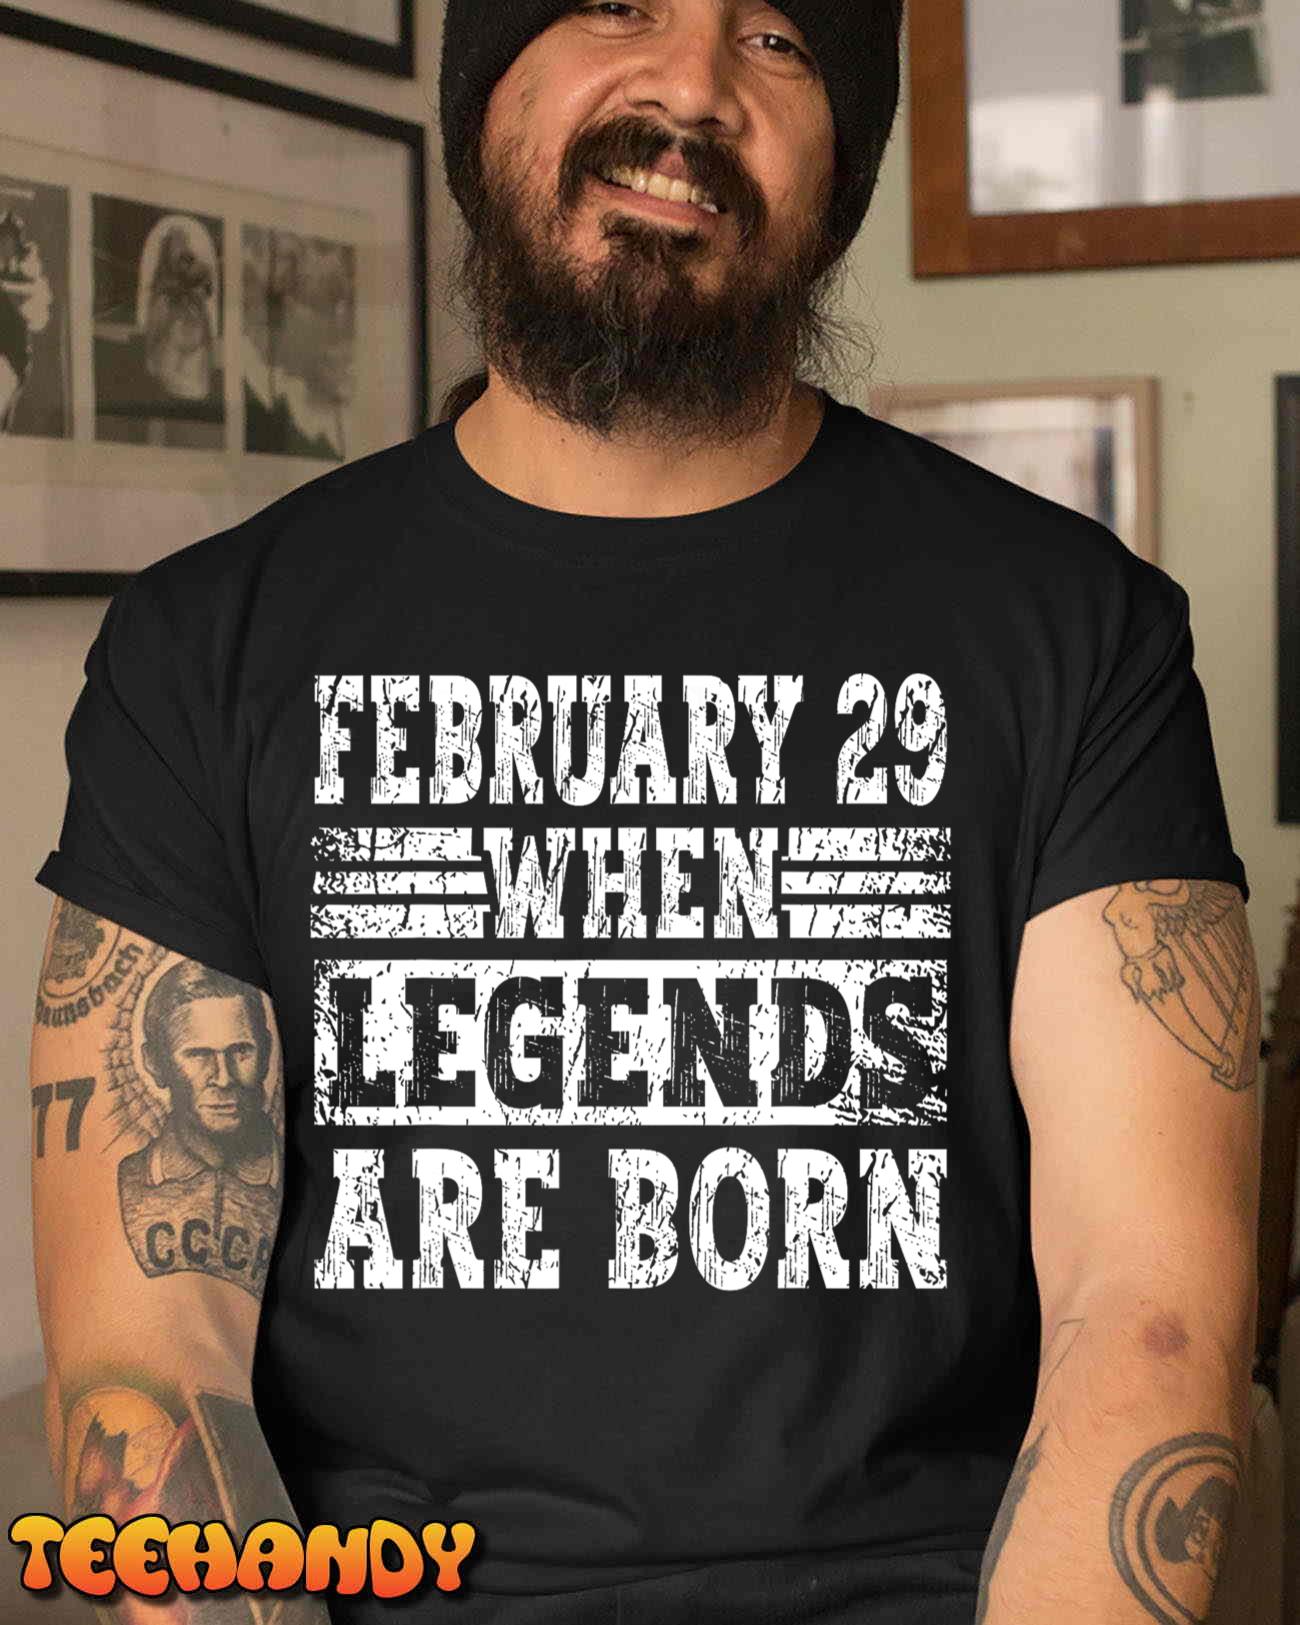 February 29 Birthday Shirts For Men & Women Cool leap year T-Shirt